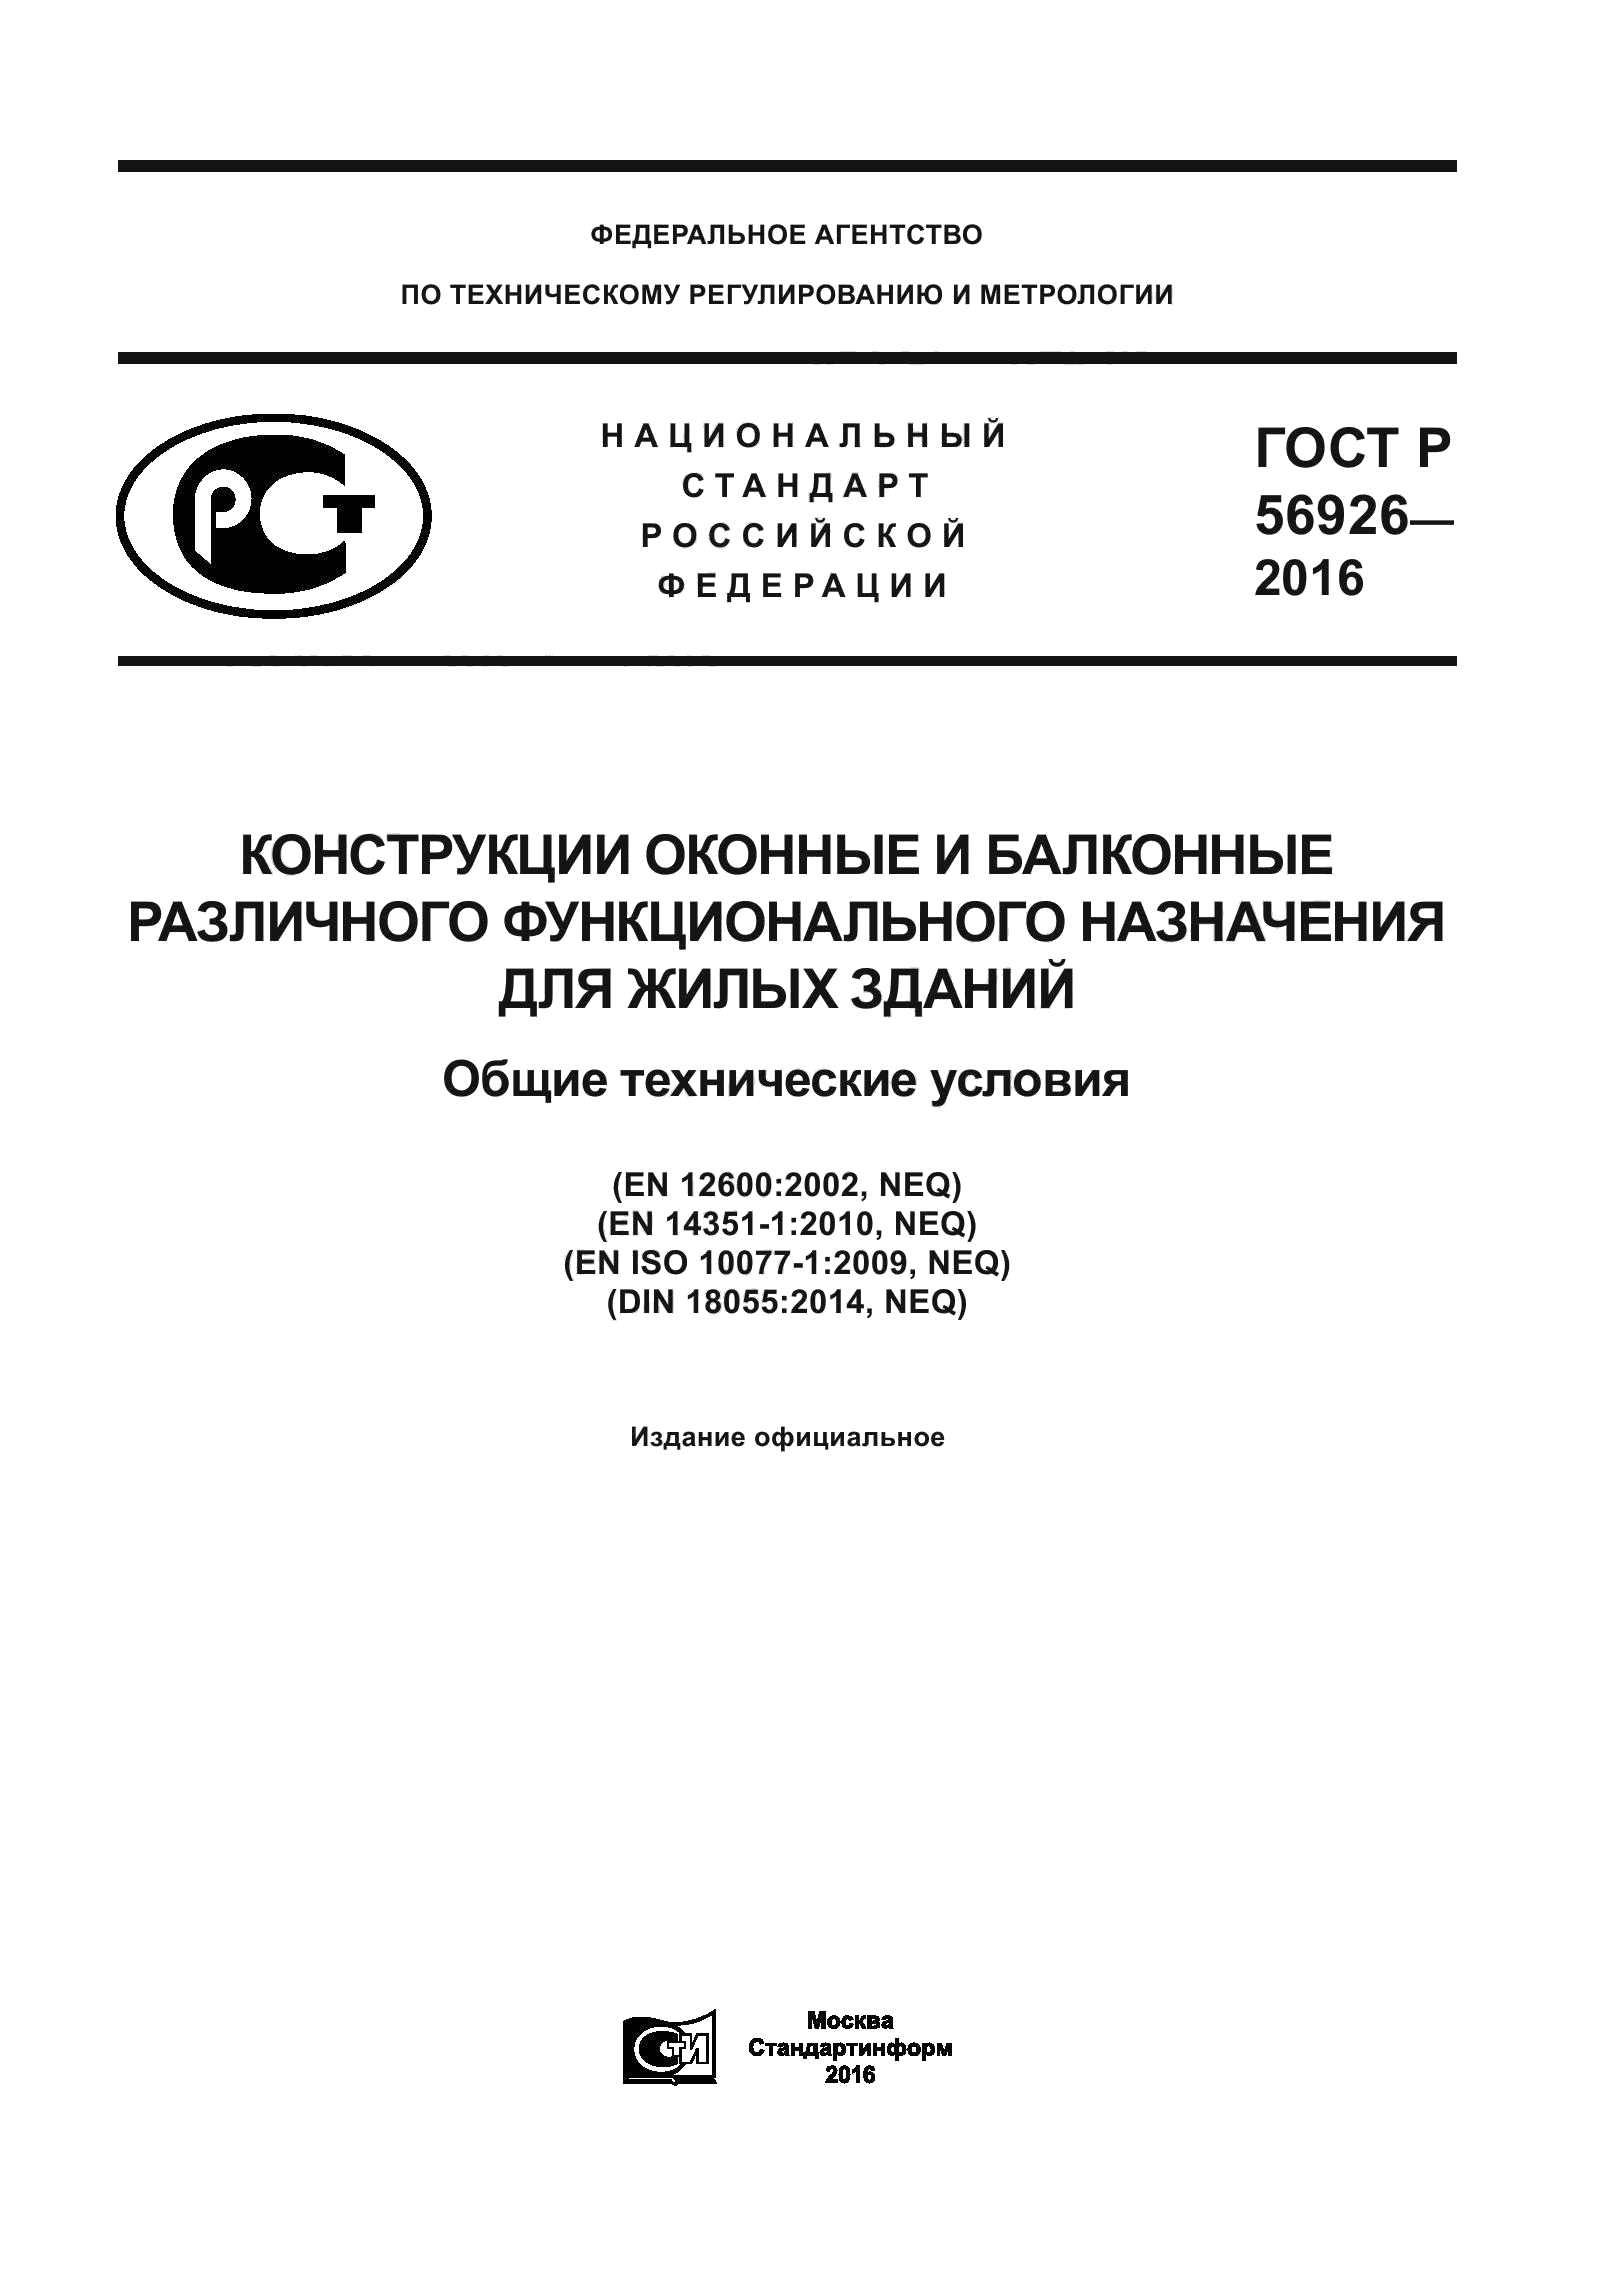 ГОСТ Р 56926-2016